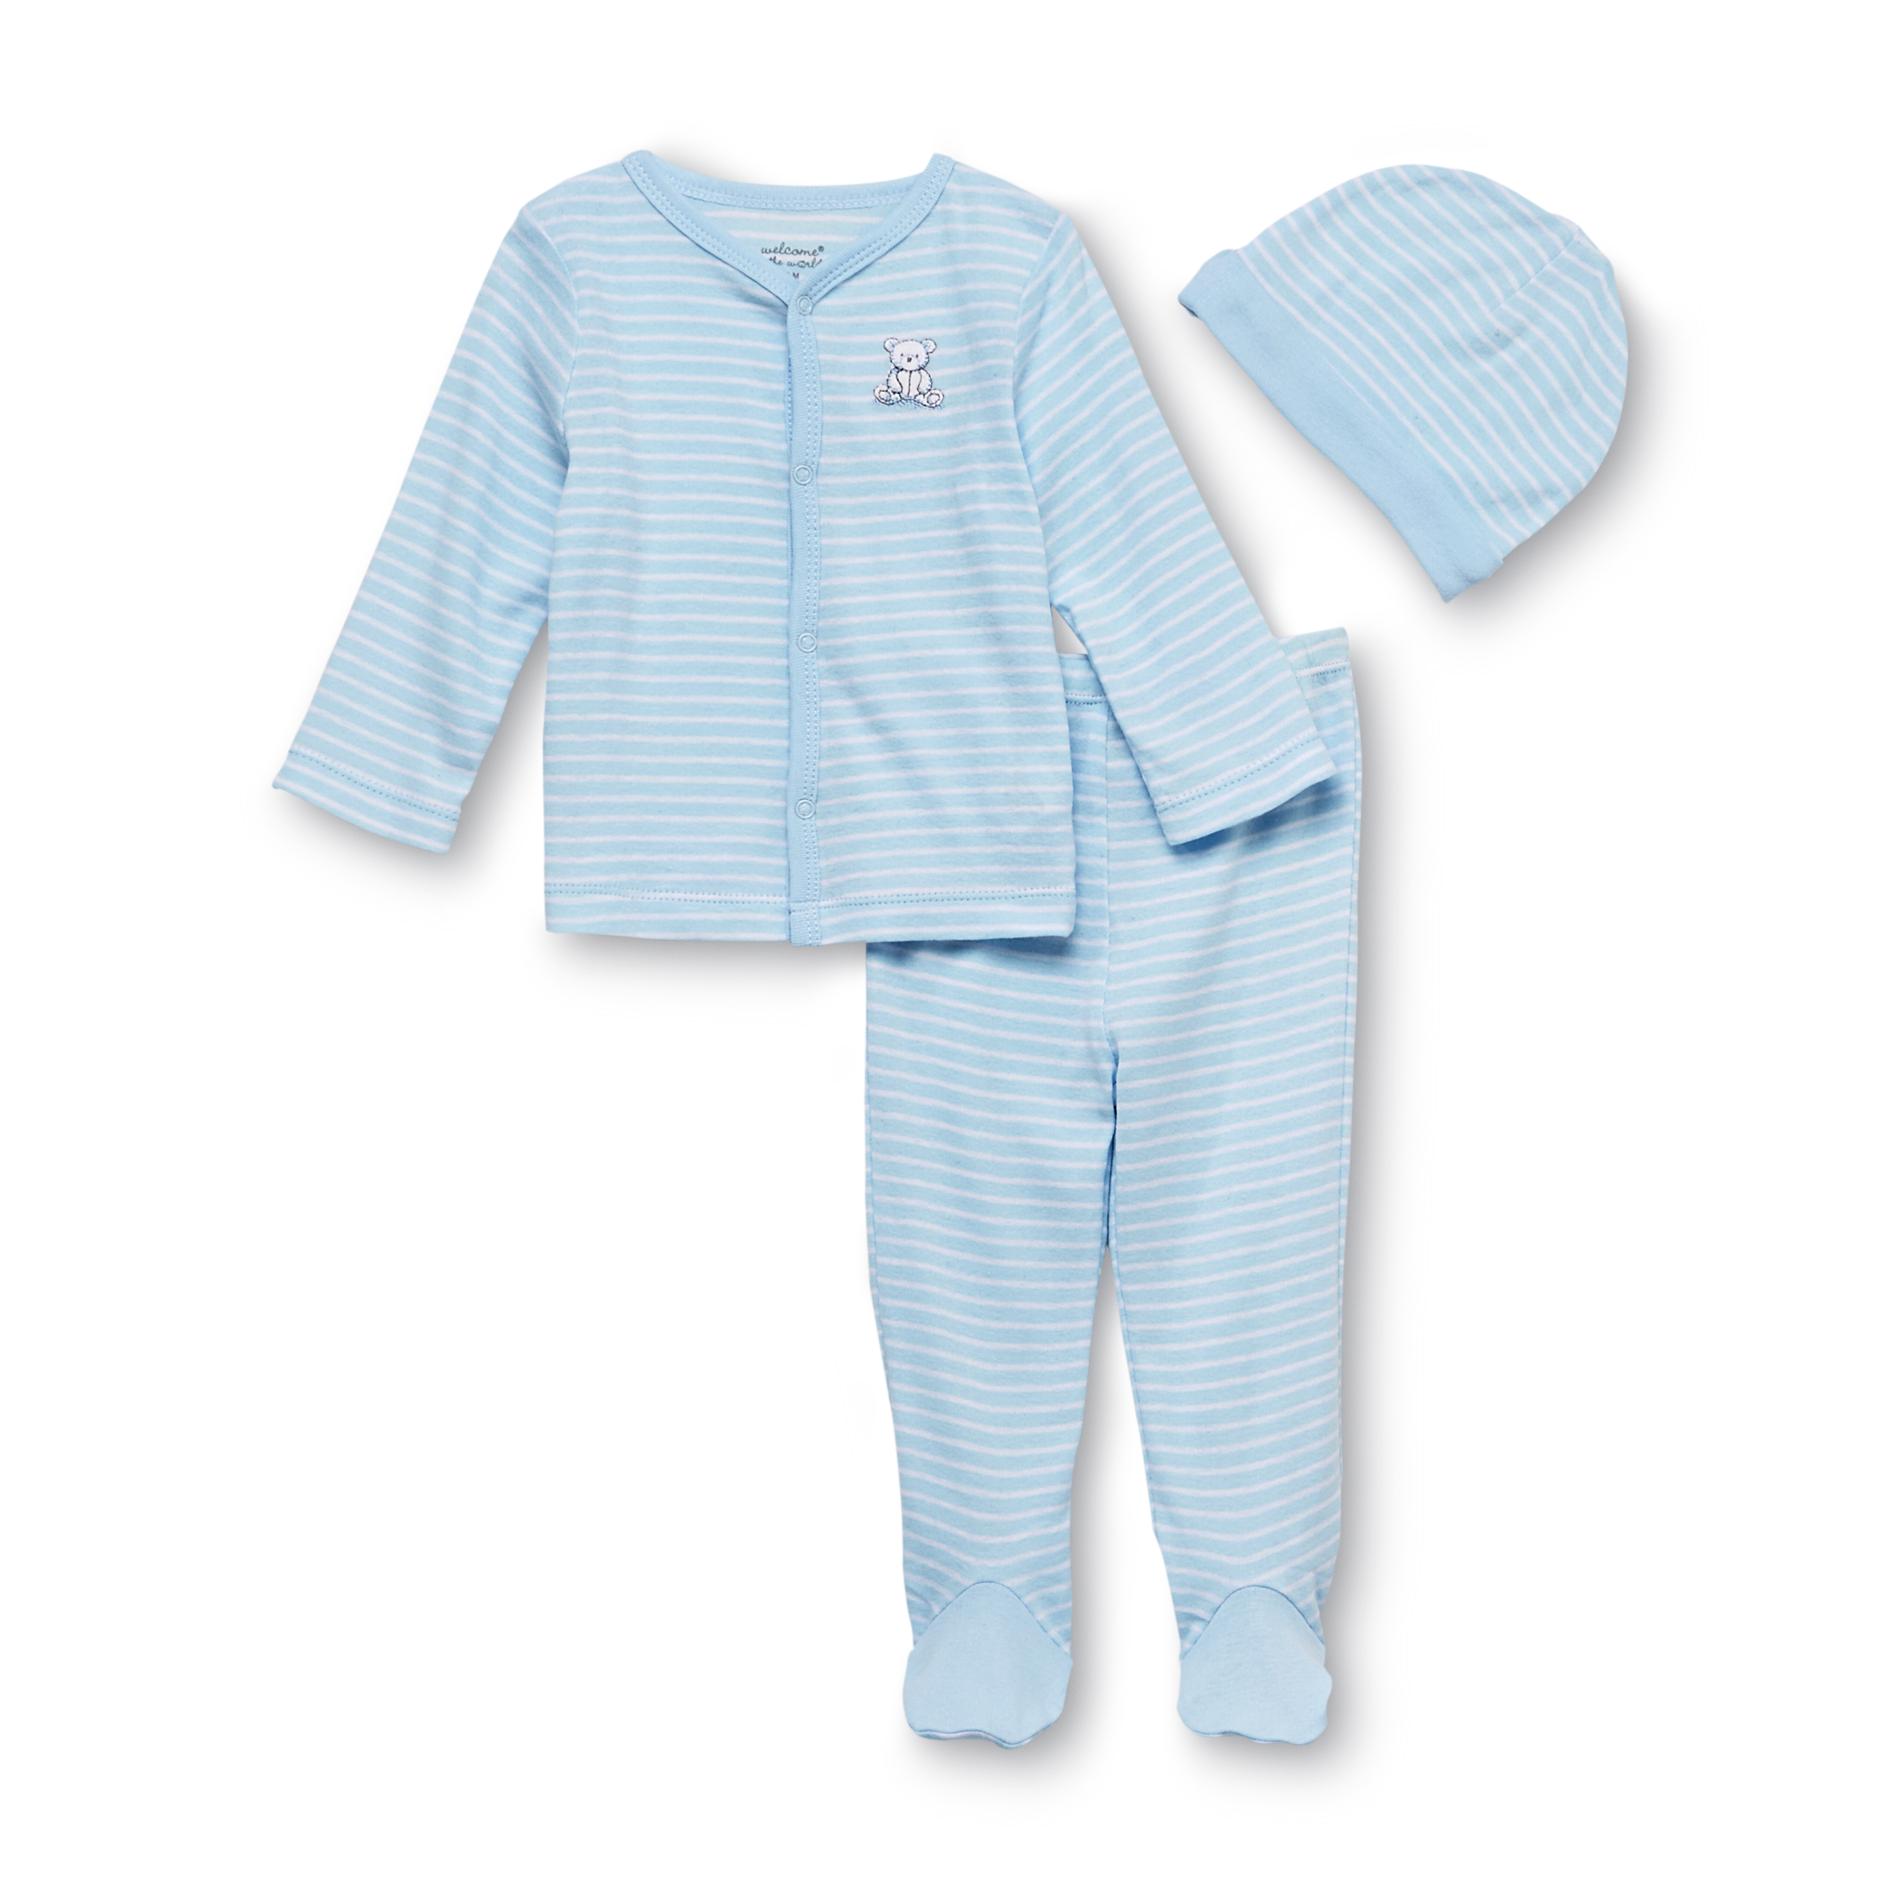 Welcome to the World Newborn Boy's Hat  Shirt & Pants - Teddy Bear & Striped